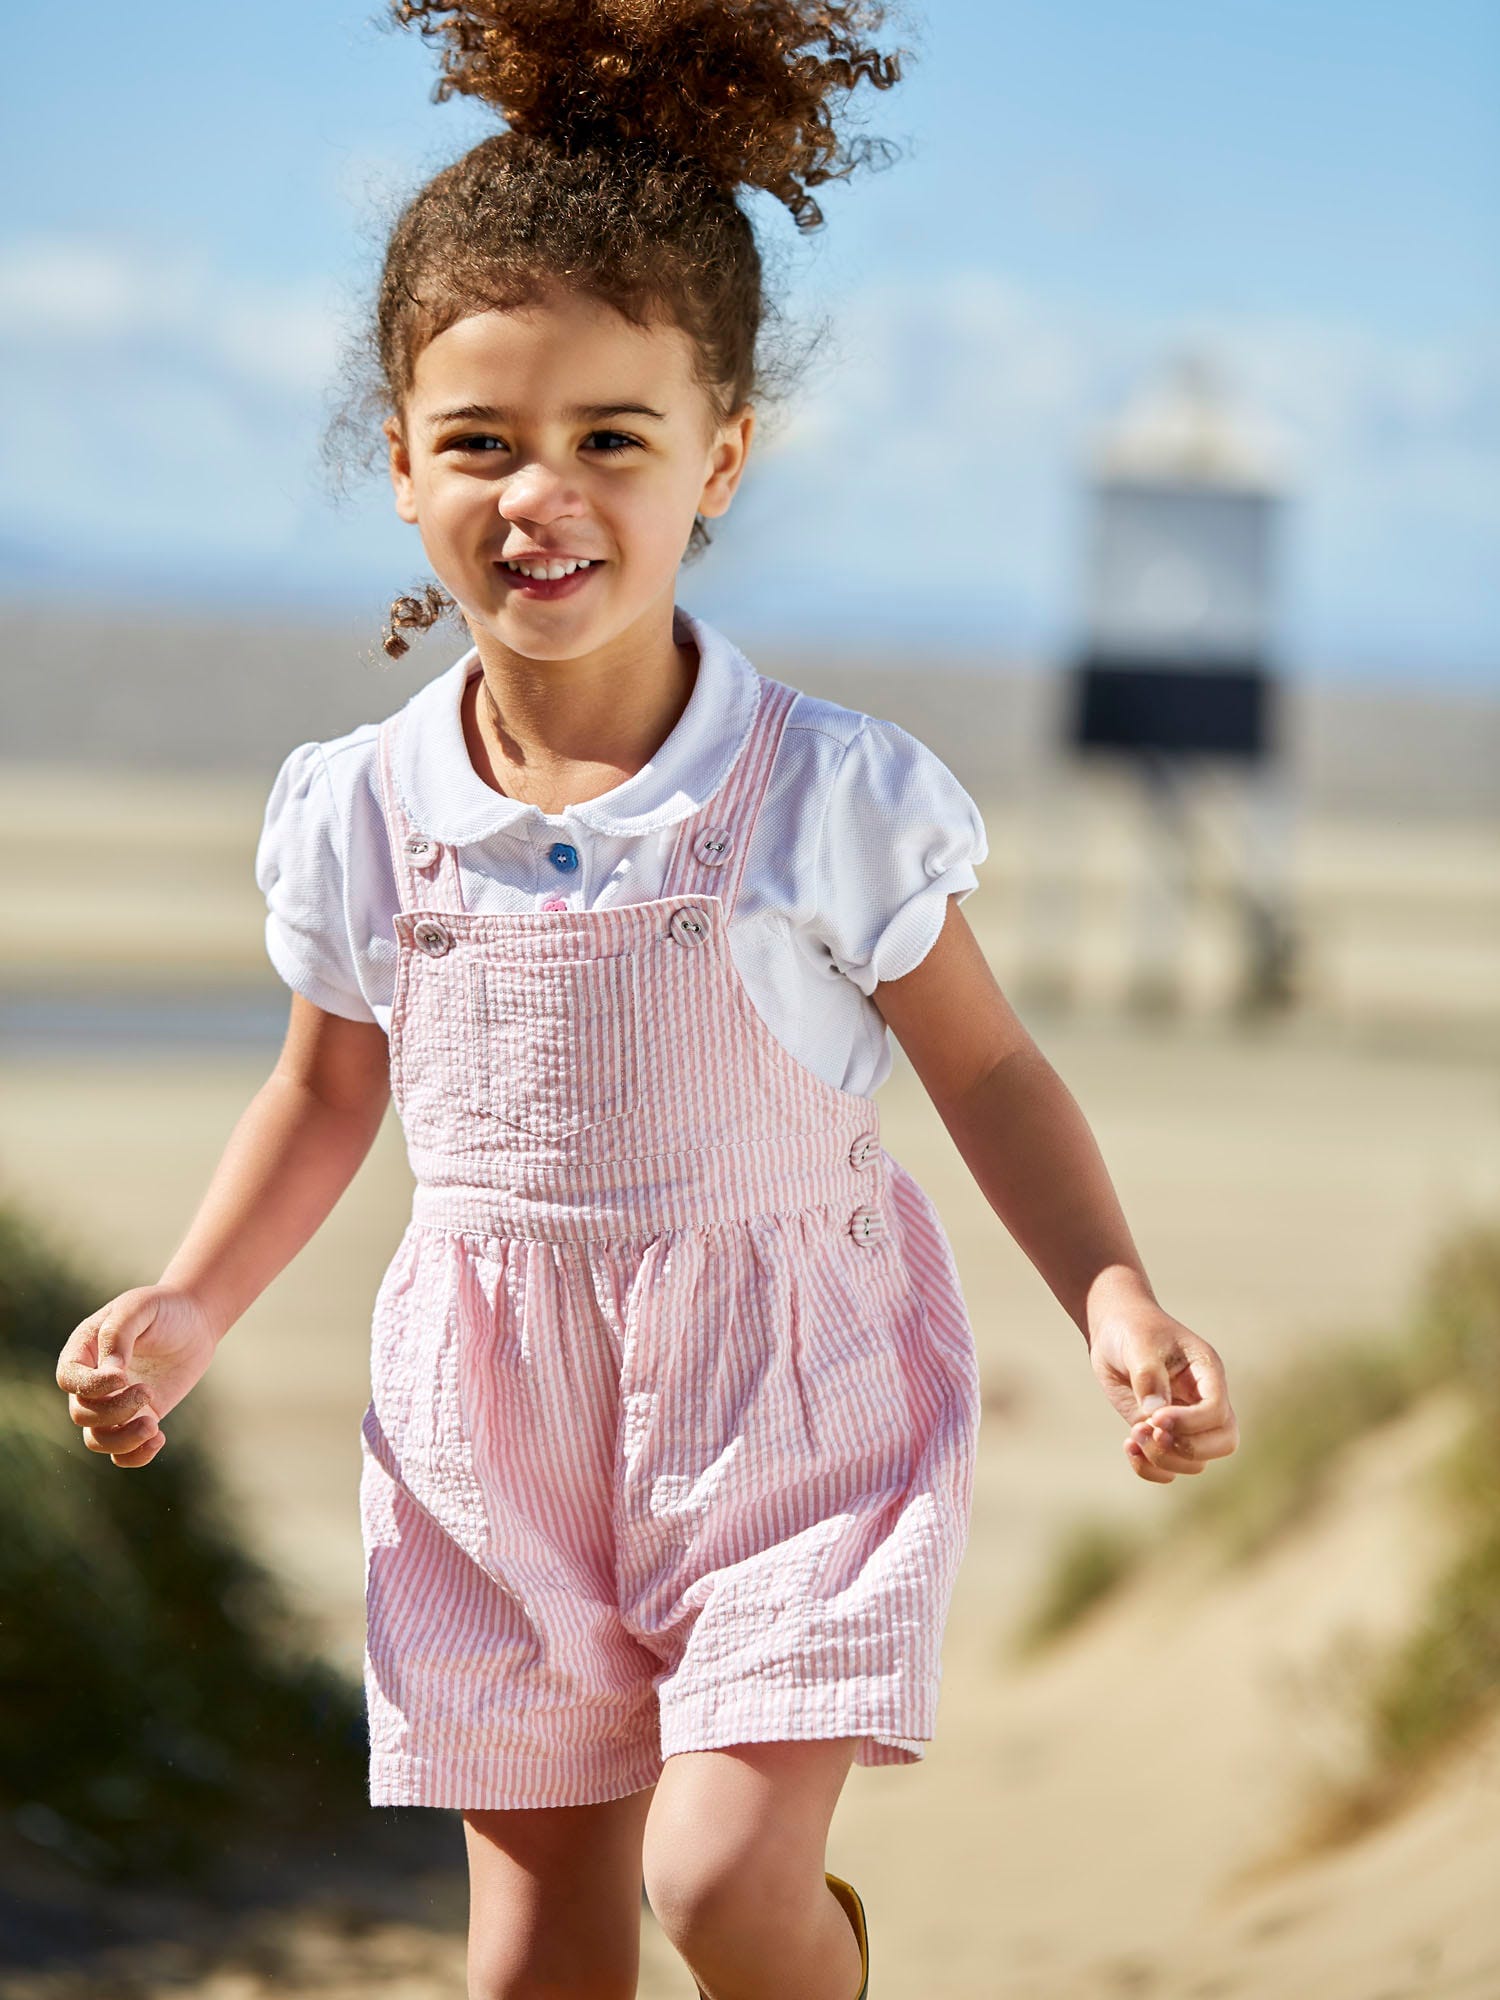 Little English | Little Girl's Polo Dress - Monogram Kids Clothes 12M